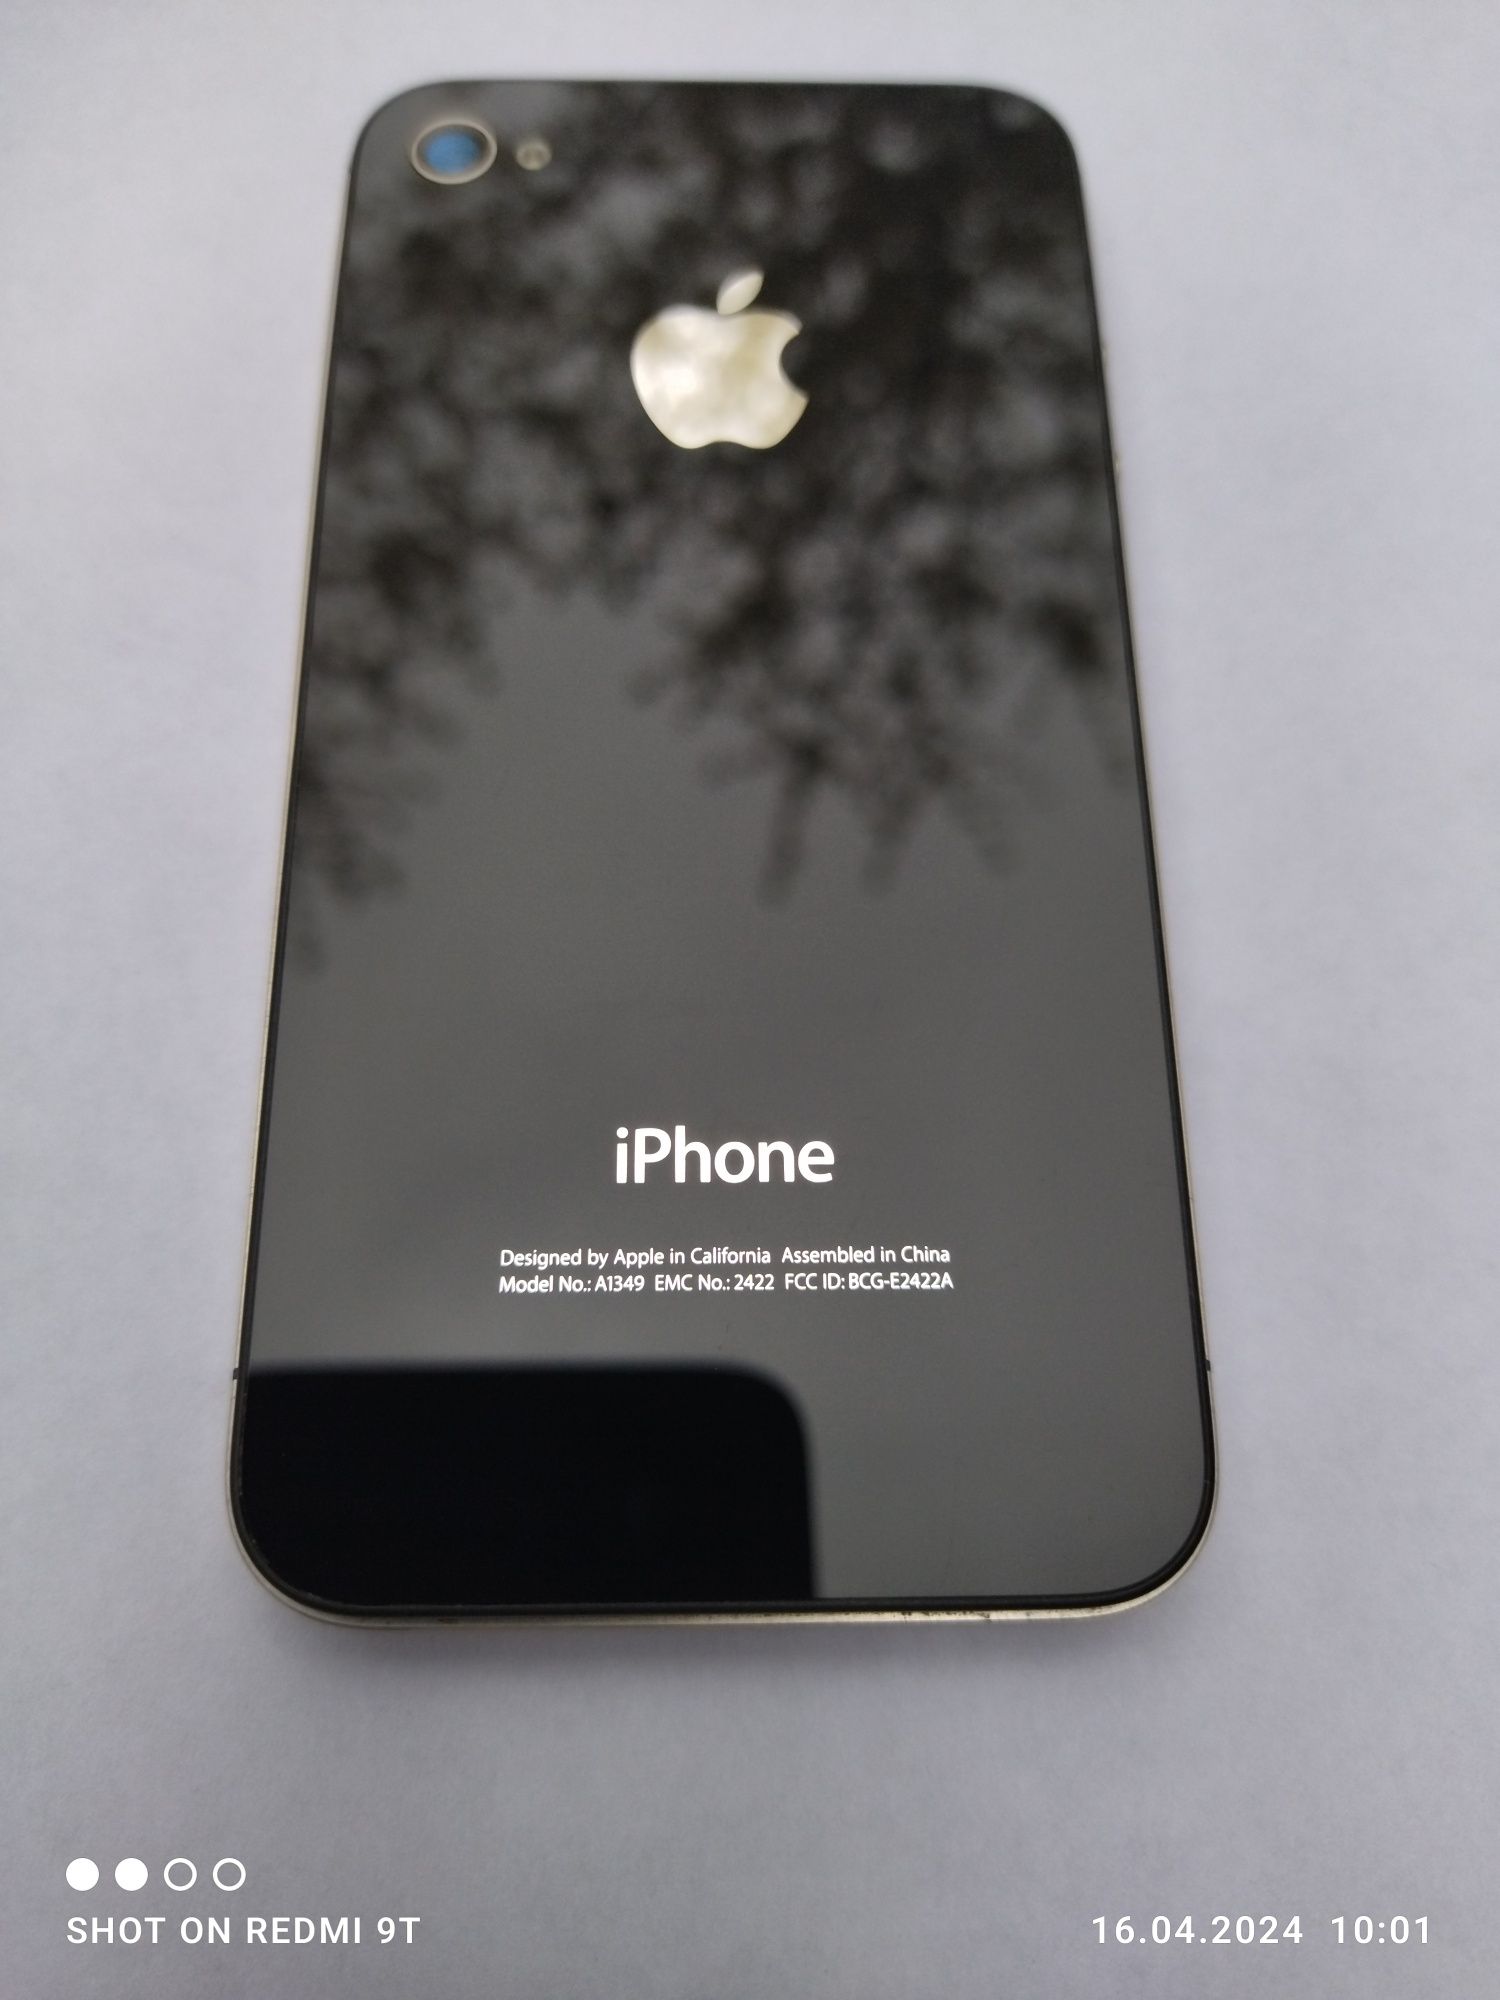 iPhone 4  CDMA (A1349)